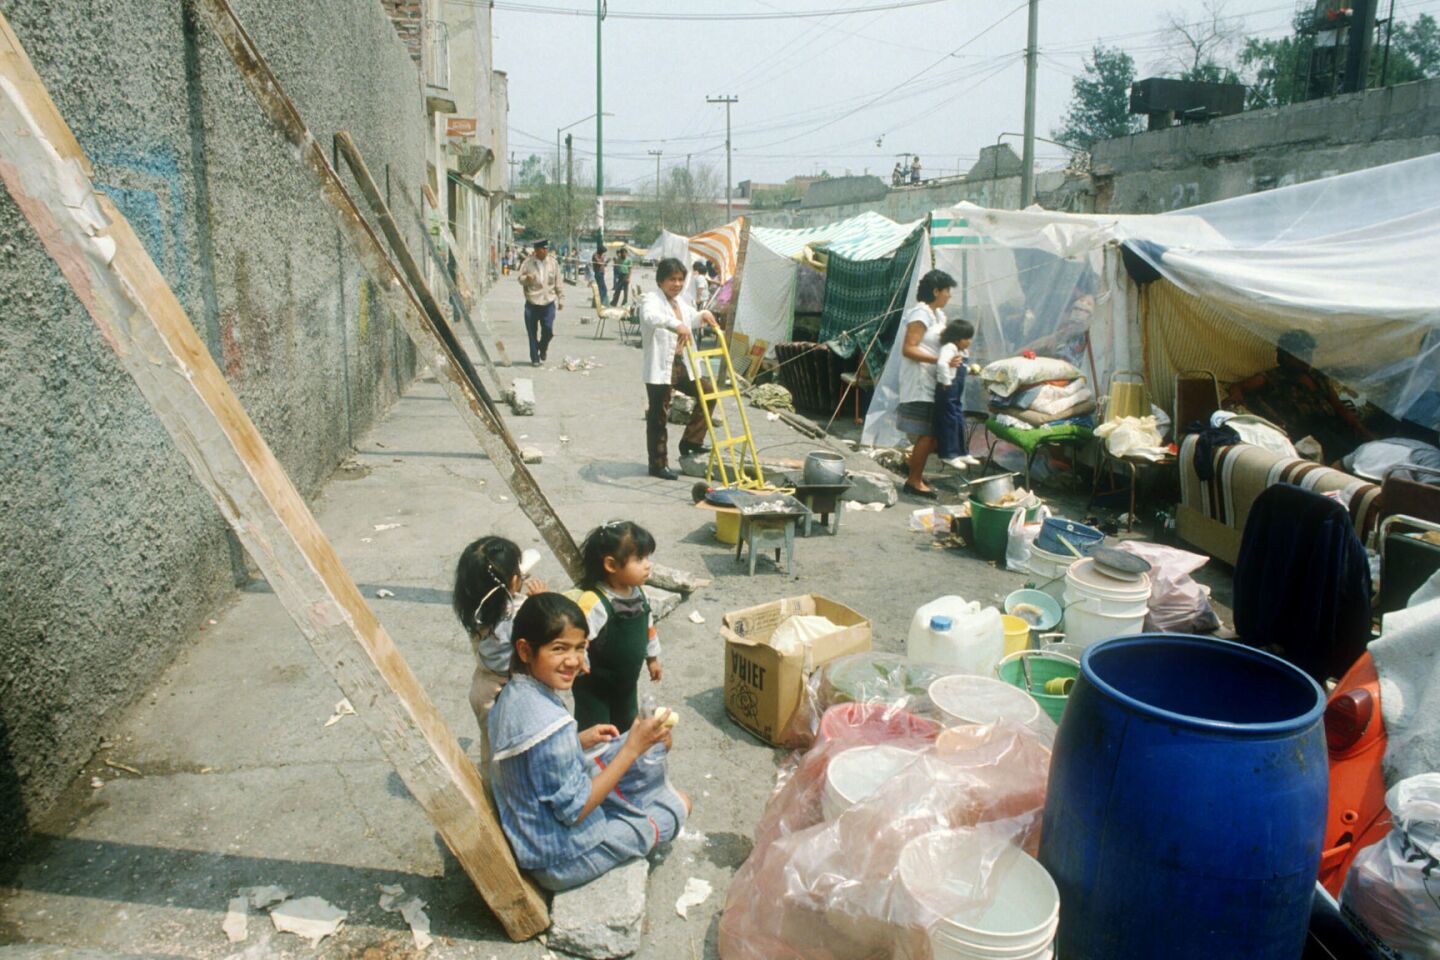 1985 Mexico City earthquake